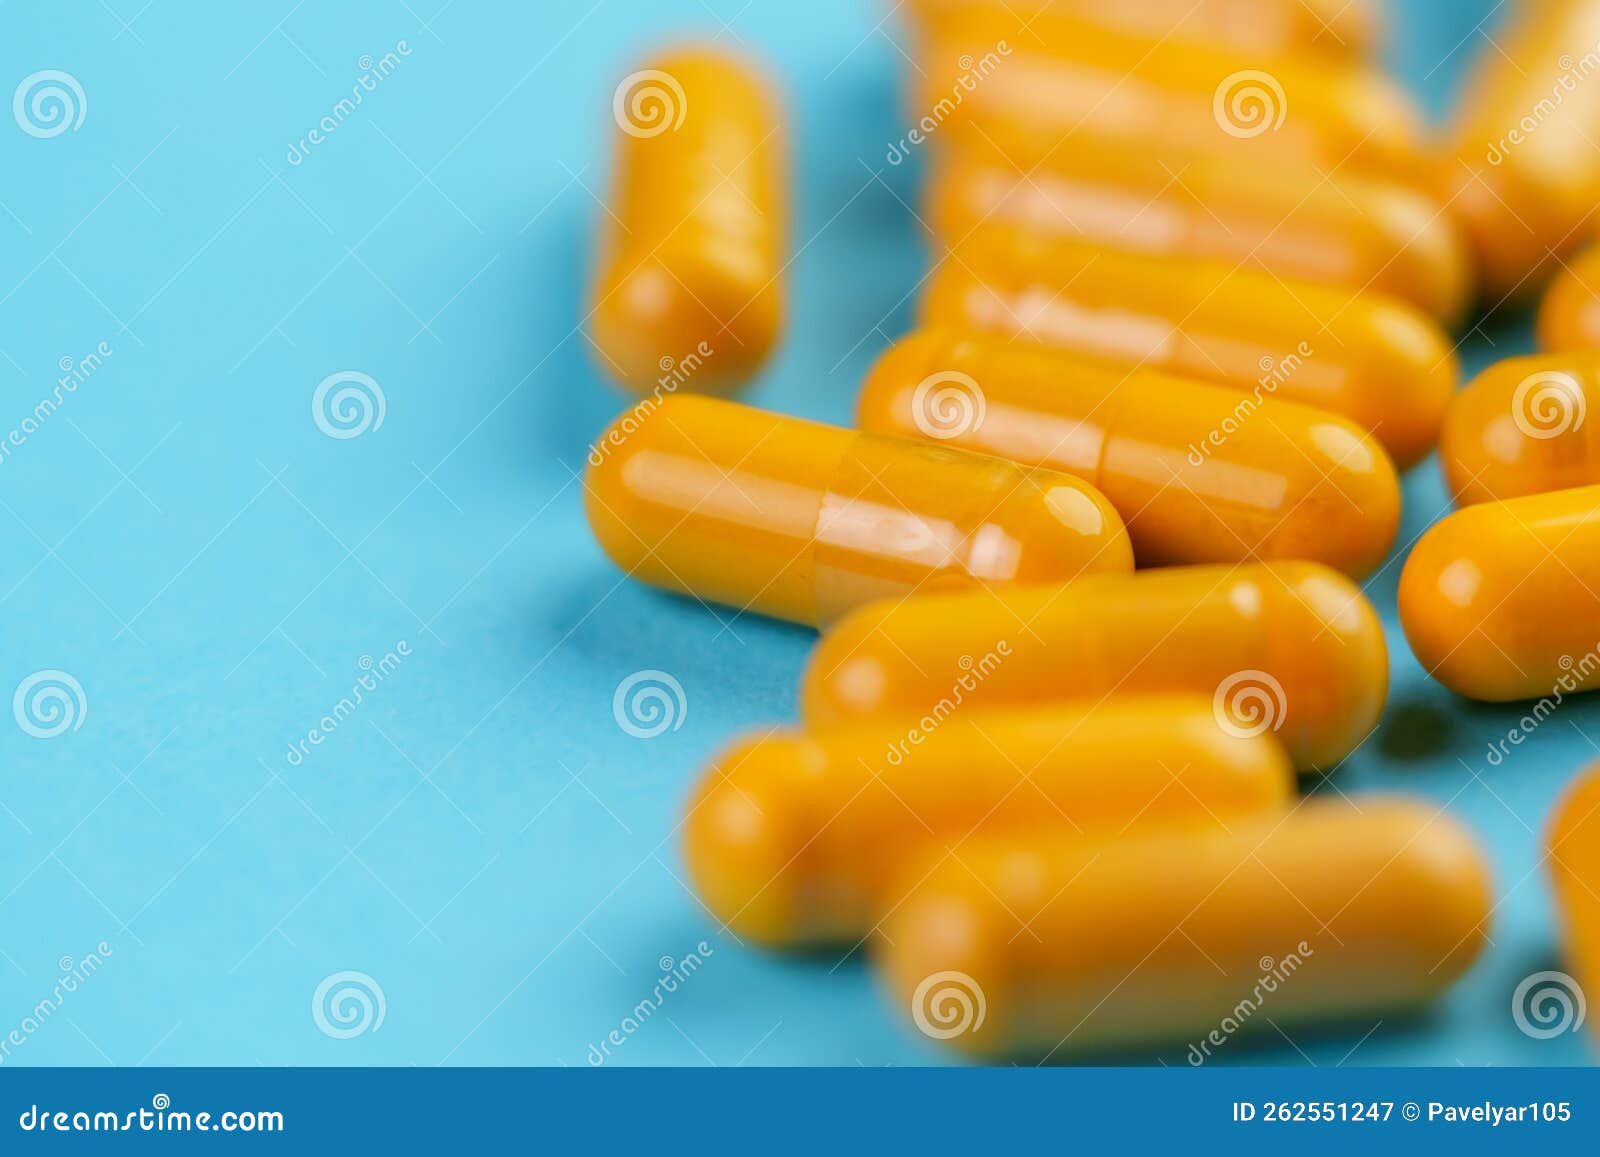 turmeric herb yellow medicative capsules